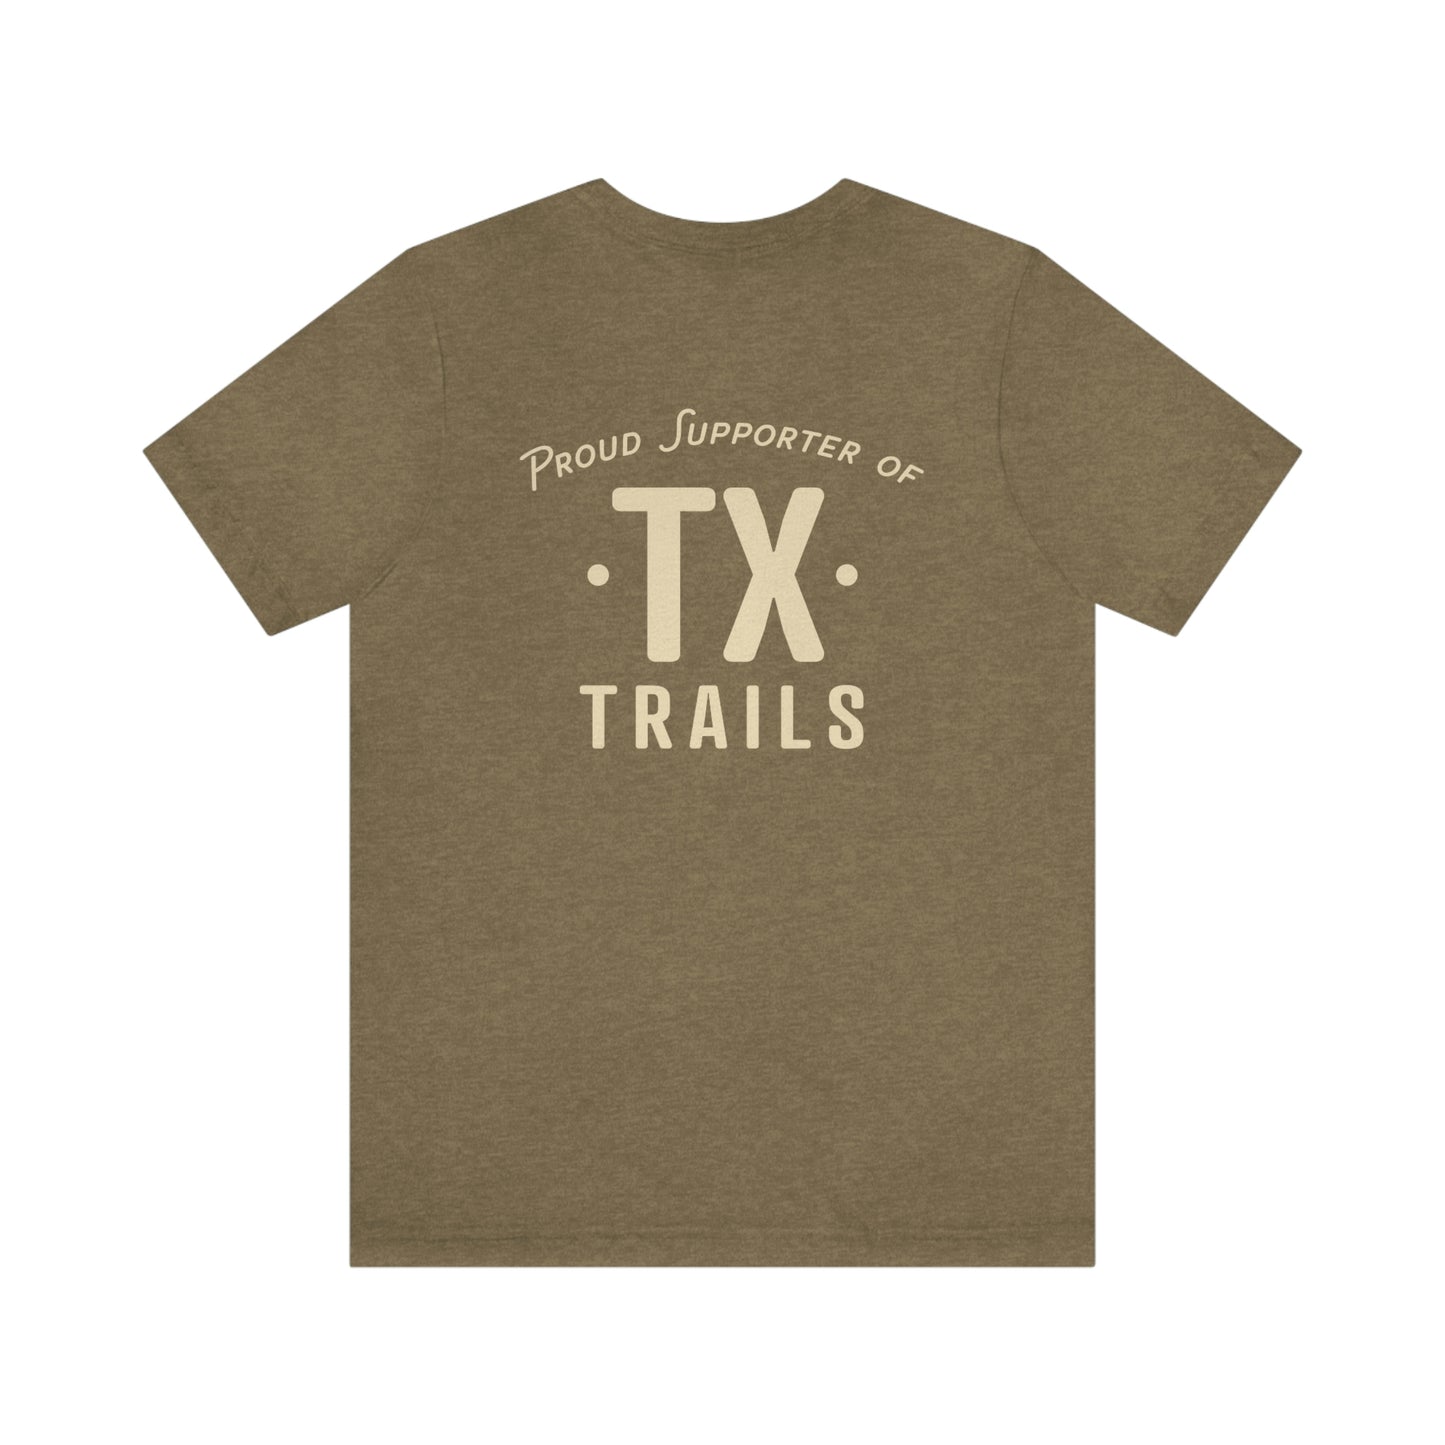 TX Trails Shirt by RDSCo